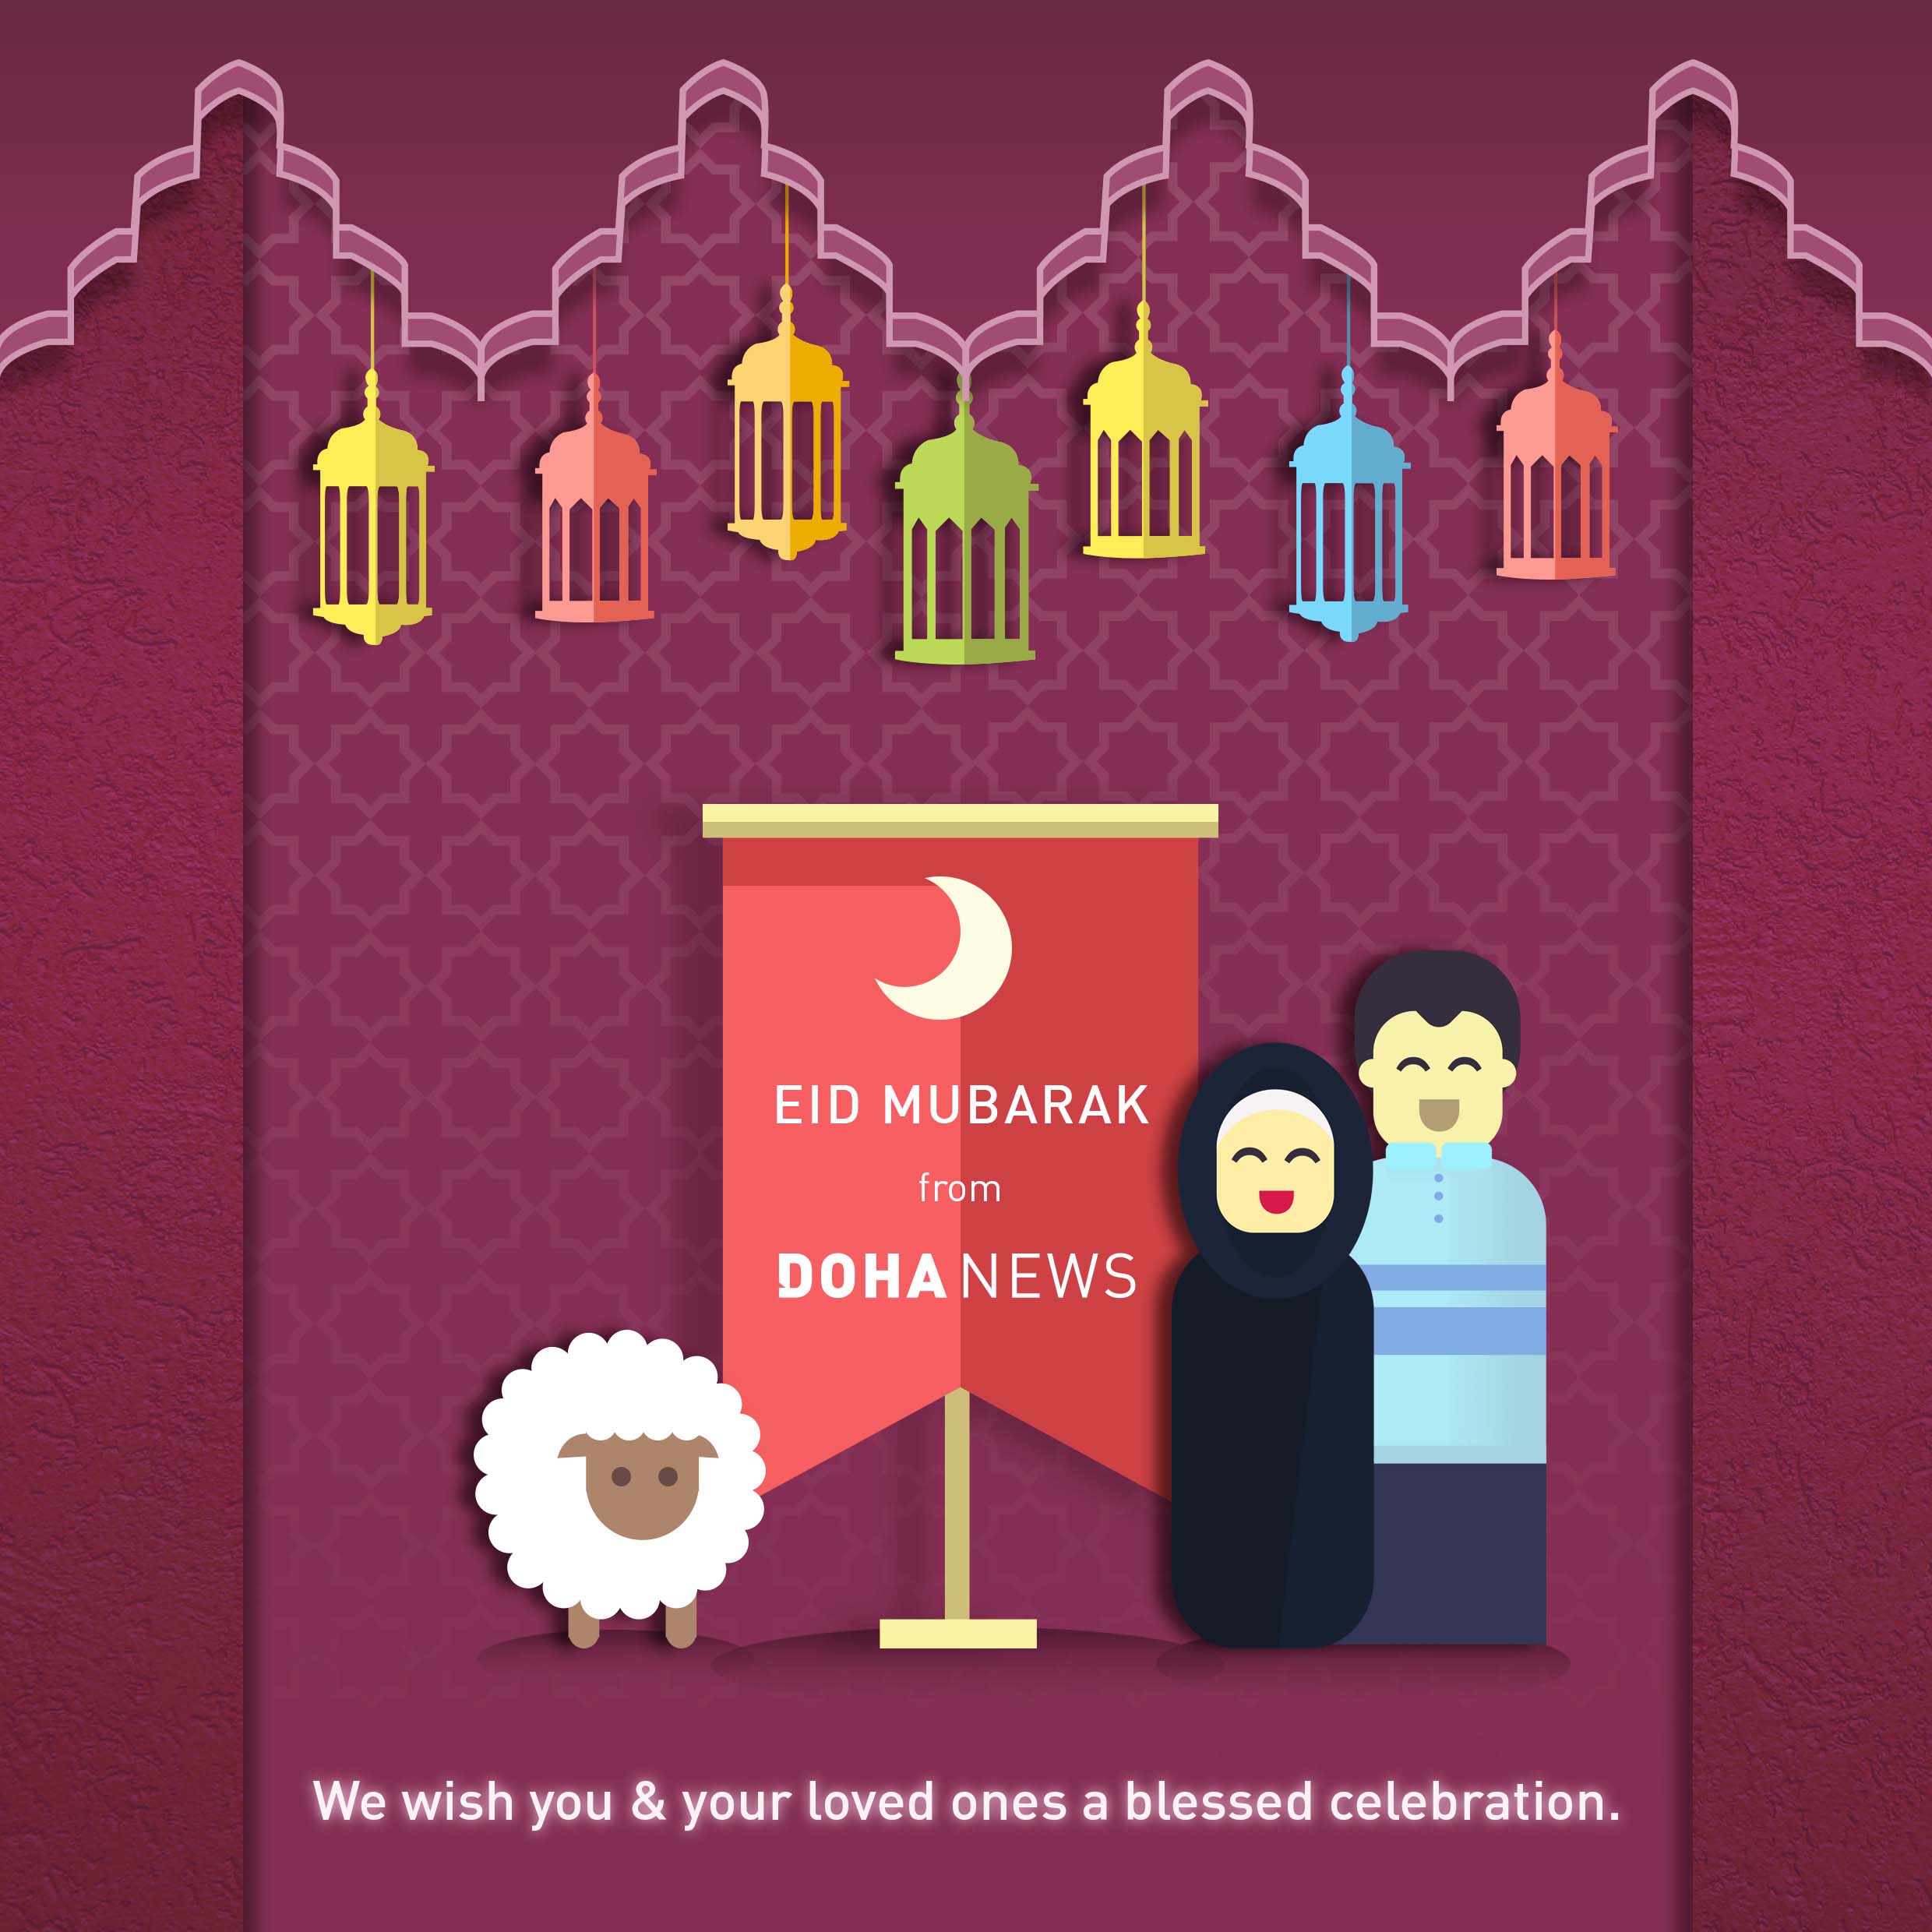 Eid Al Adha greeting from Doha News